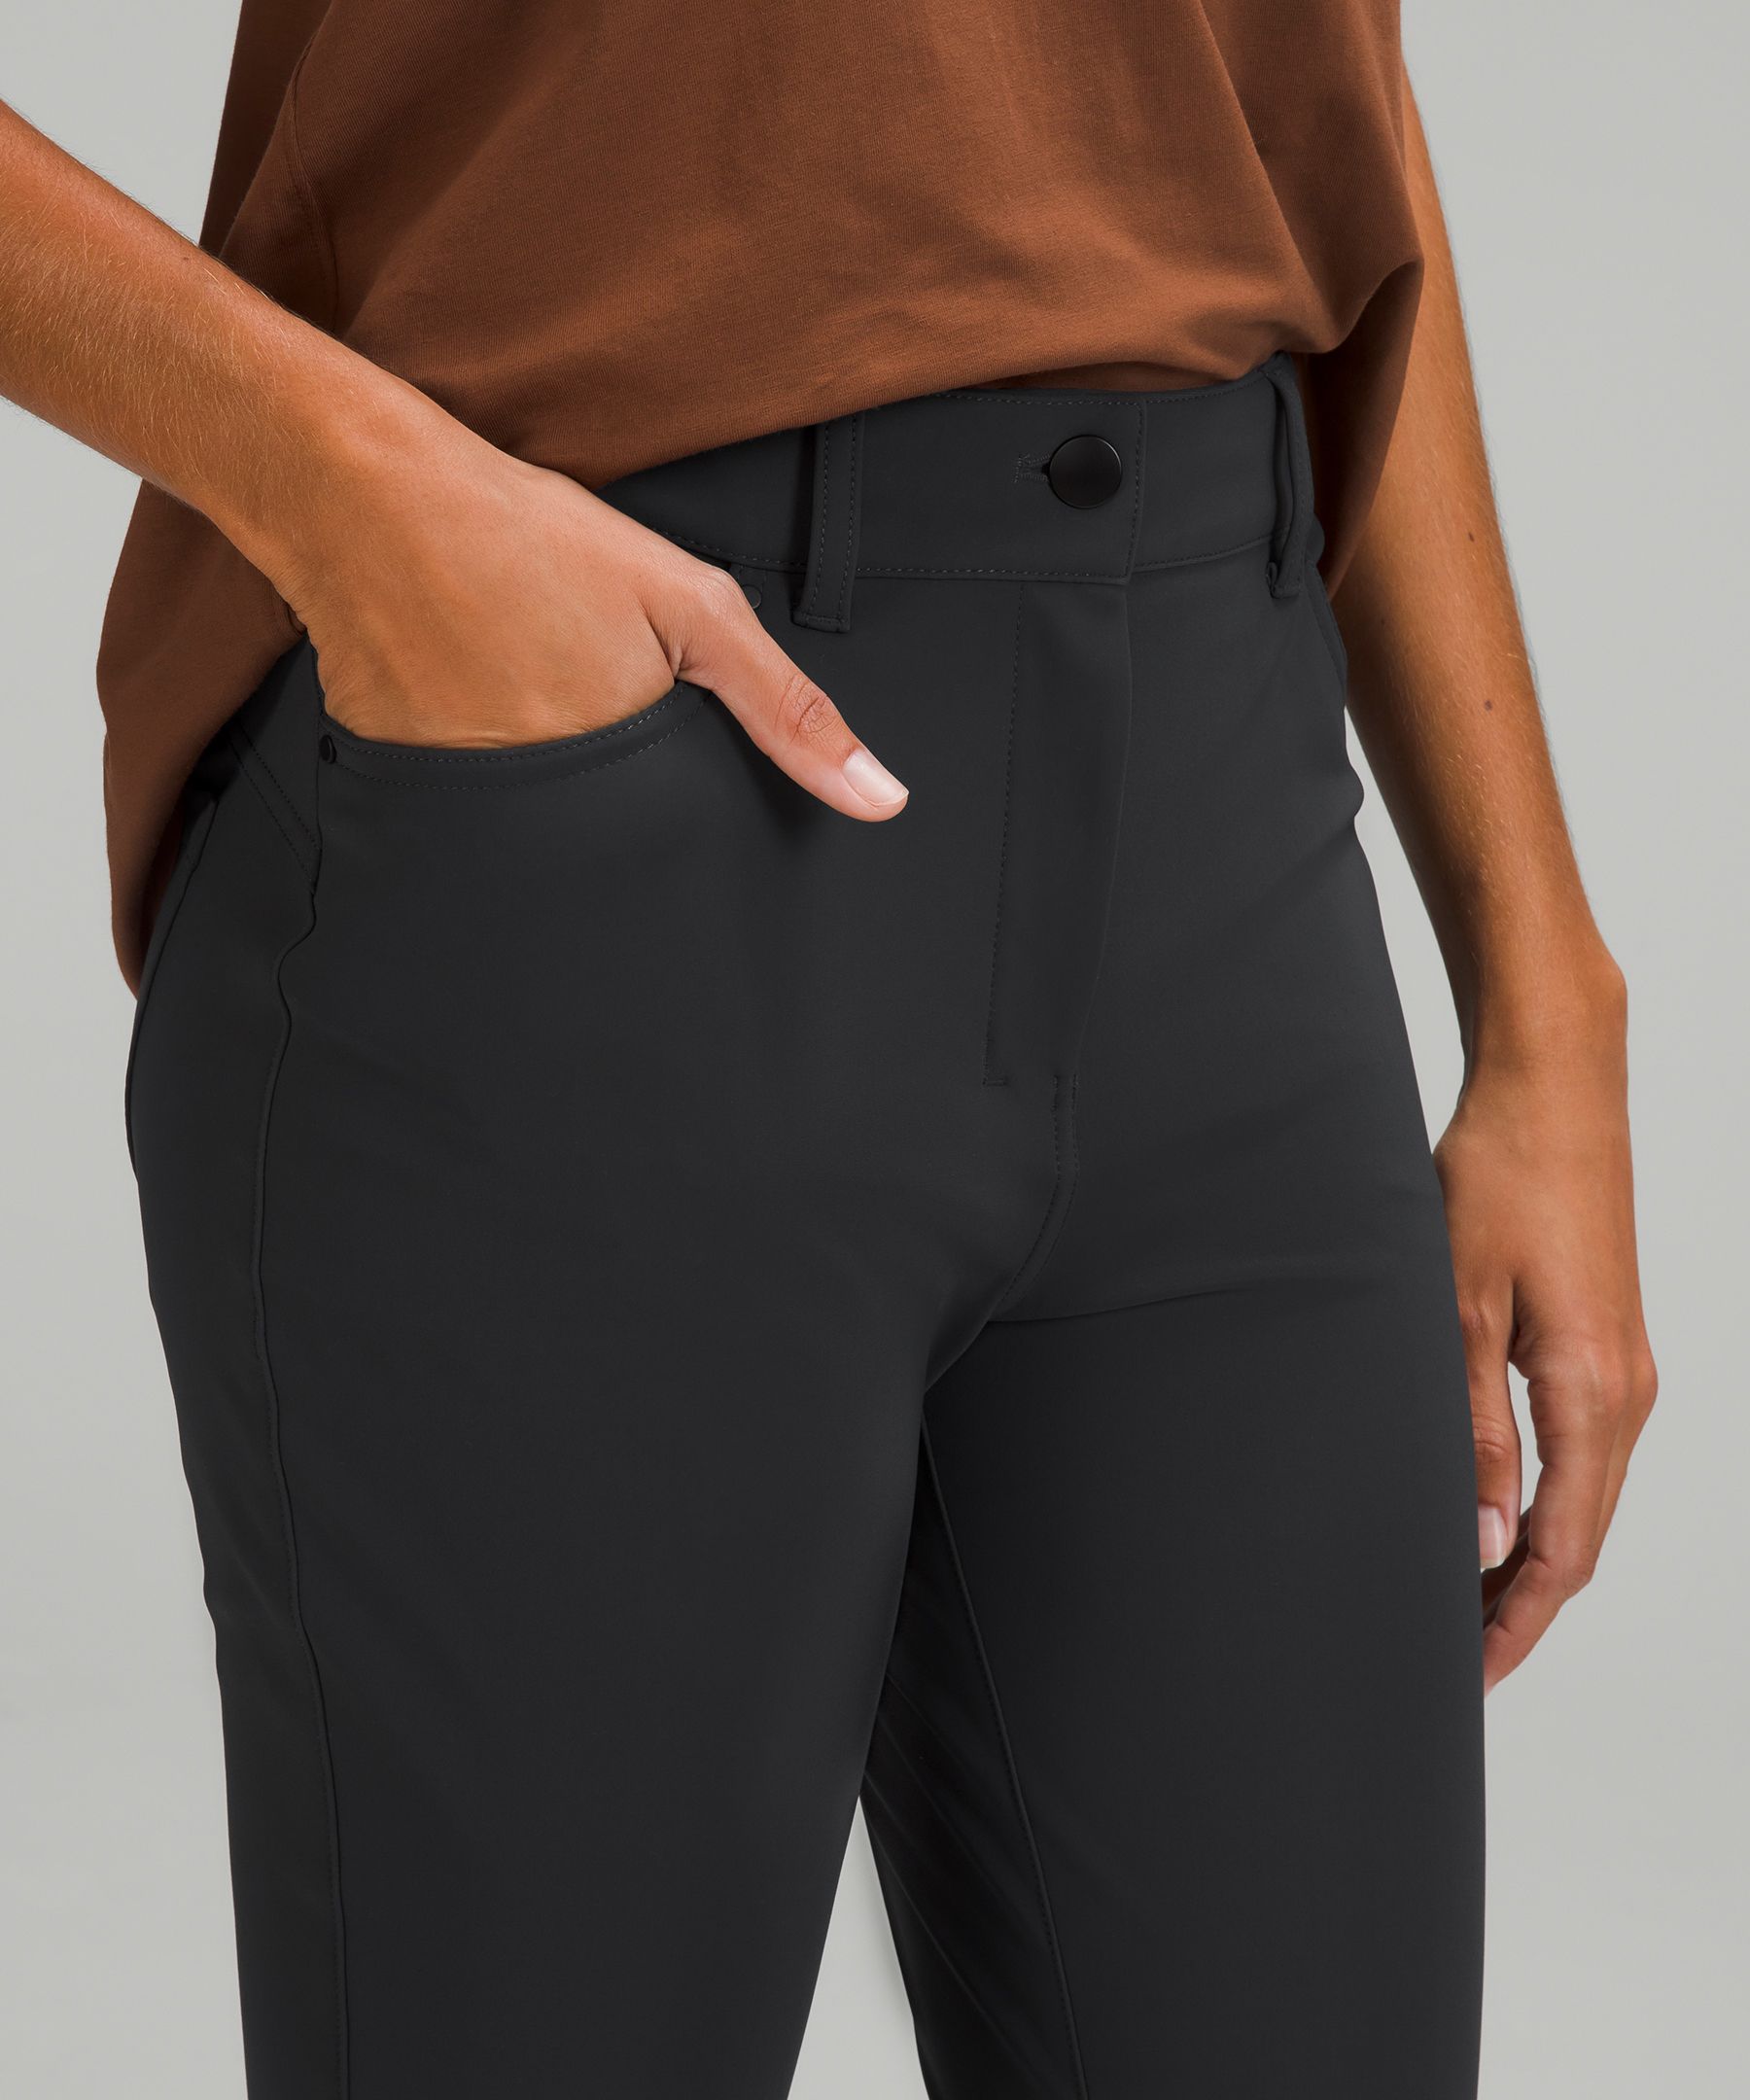 City Sleek Slim-Fit 5 Pocket High-Rise Pant, Women's Trousers